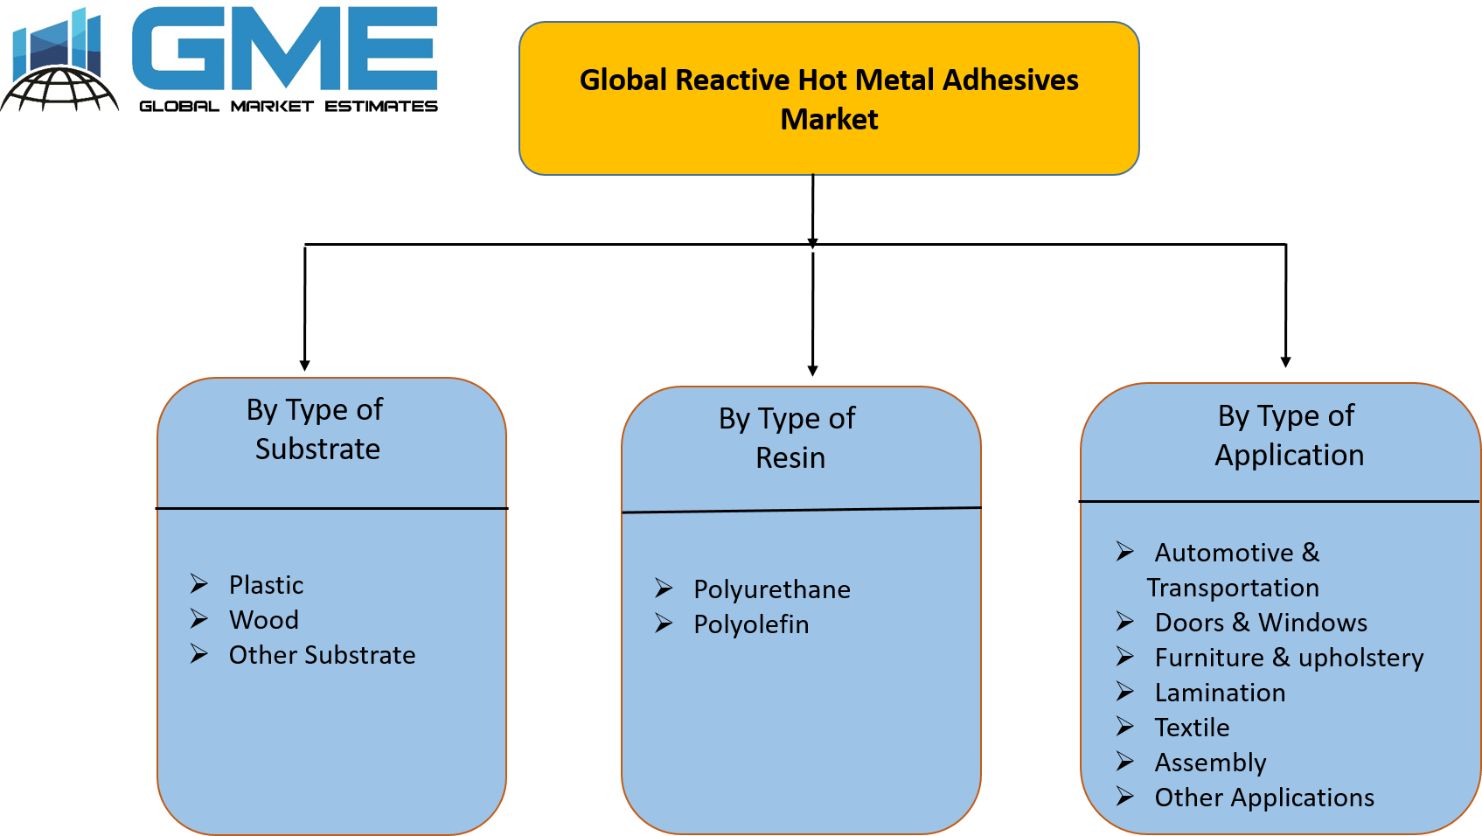 Global Reactive Hot Metal Adhesives Market Segmentation